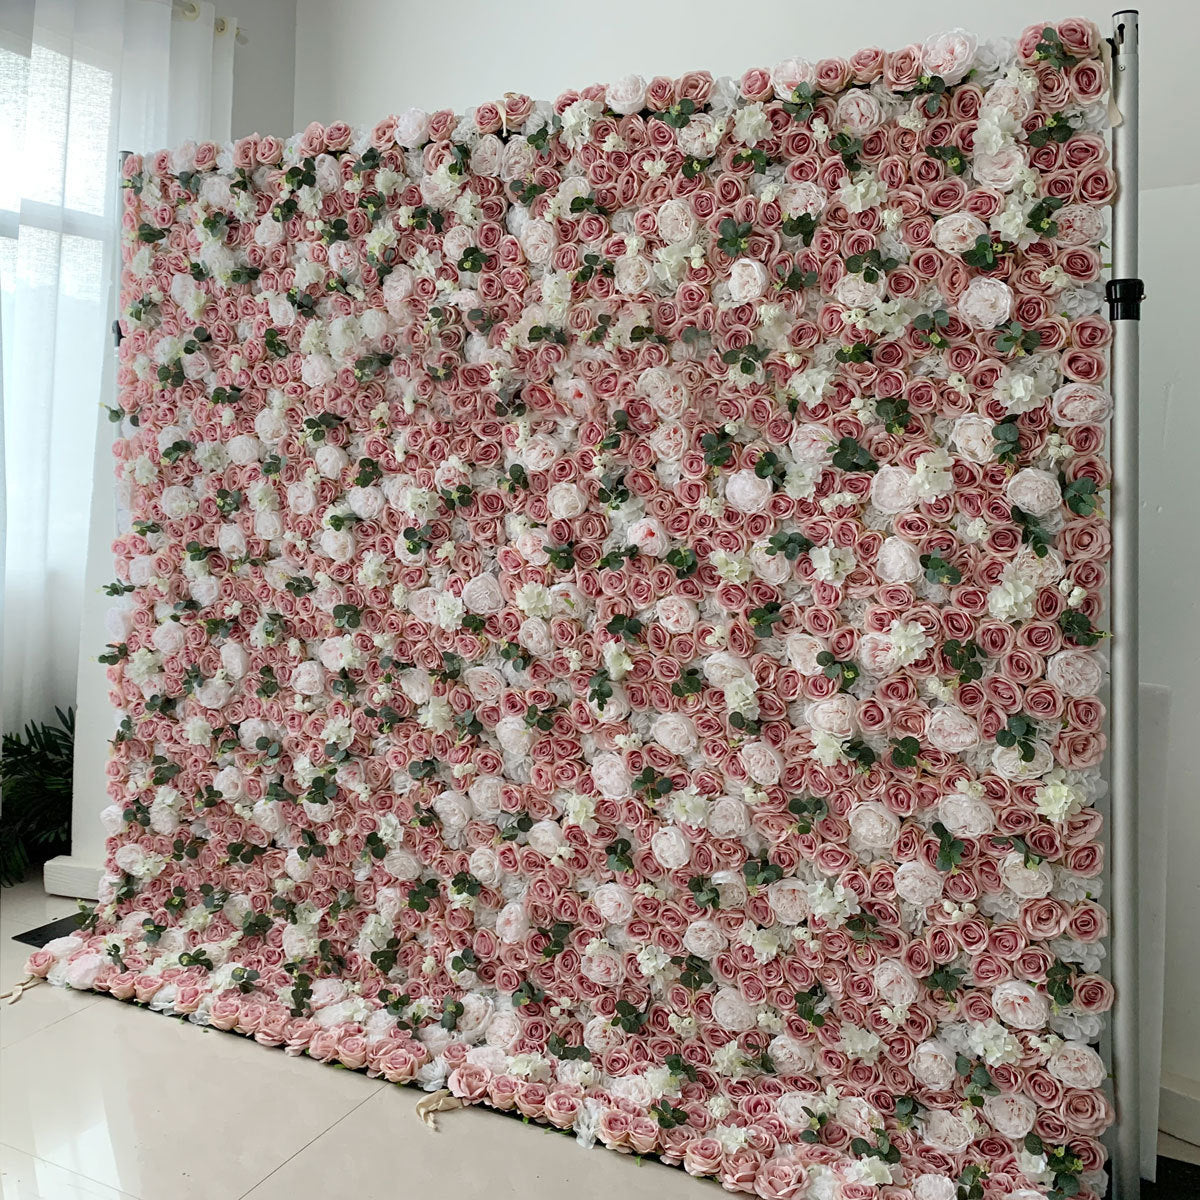 3D Artificial Flower Wall Arrangement Wedding Party Birthday Backdrop Decor HQ1158